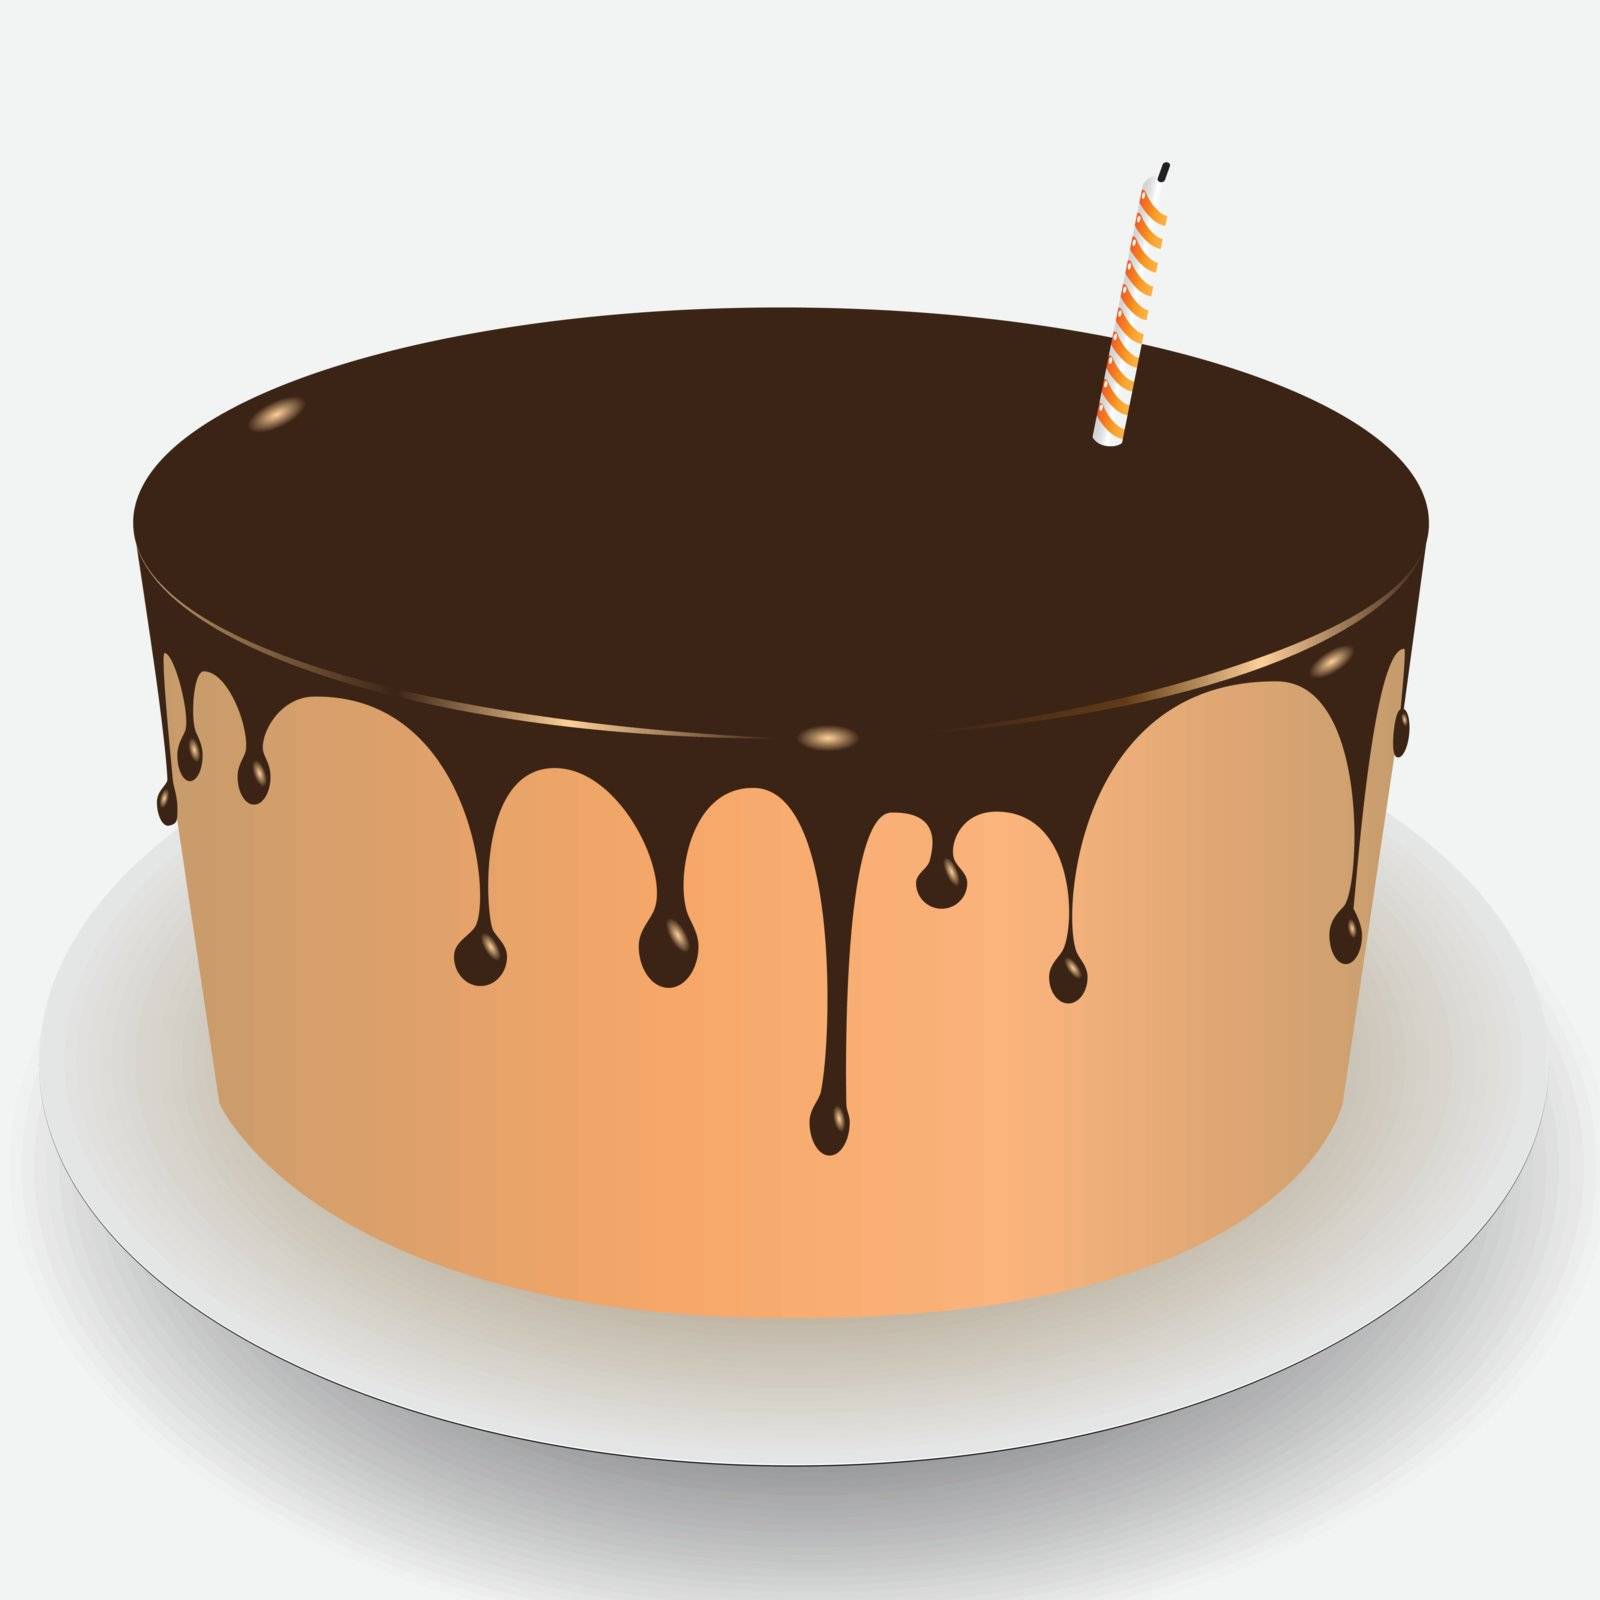 Cake chocolate icing by VIPDesignUSA